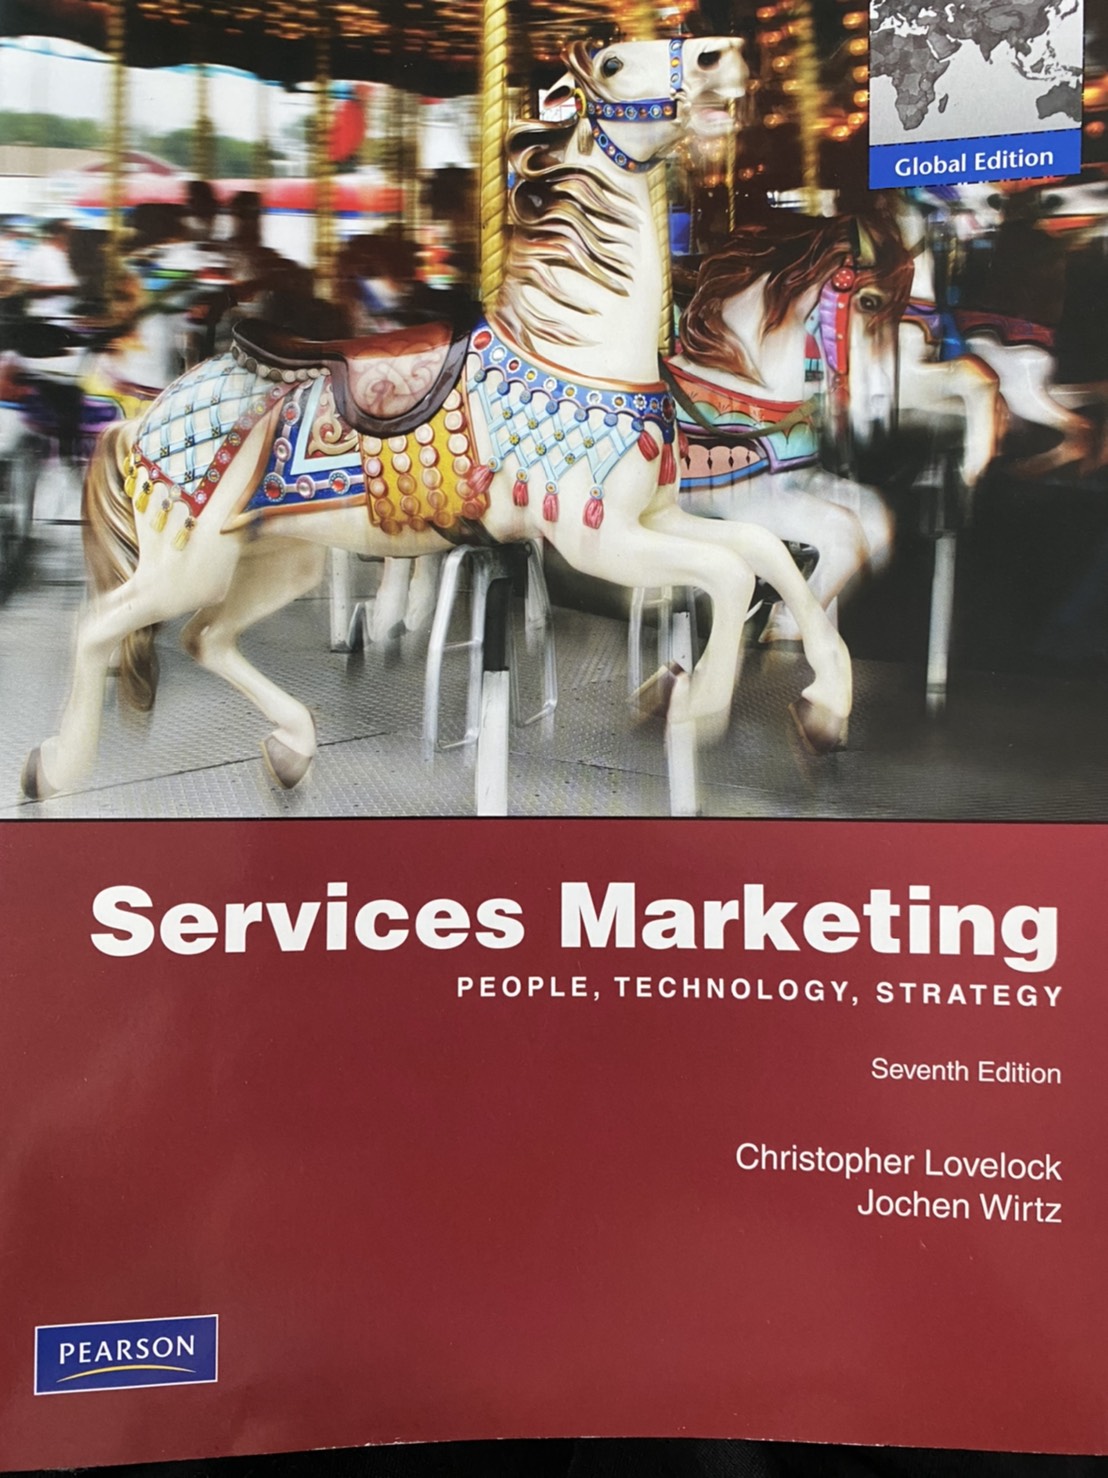 Services Marketing 7th Edition 詳細資料